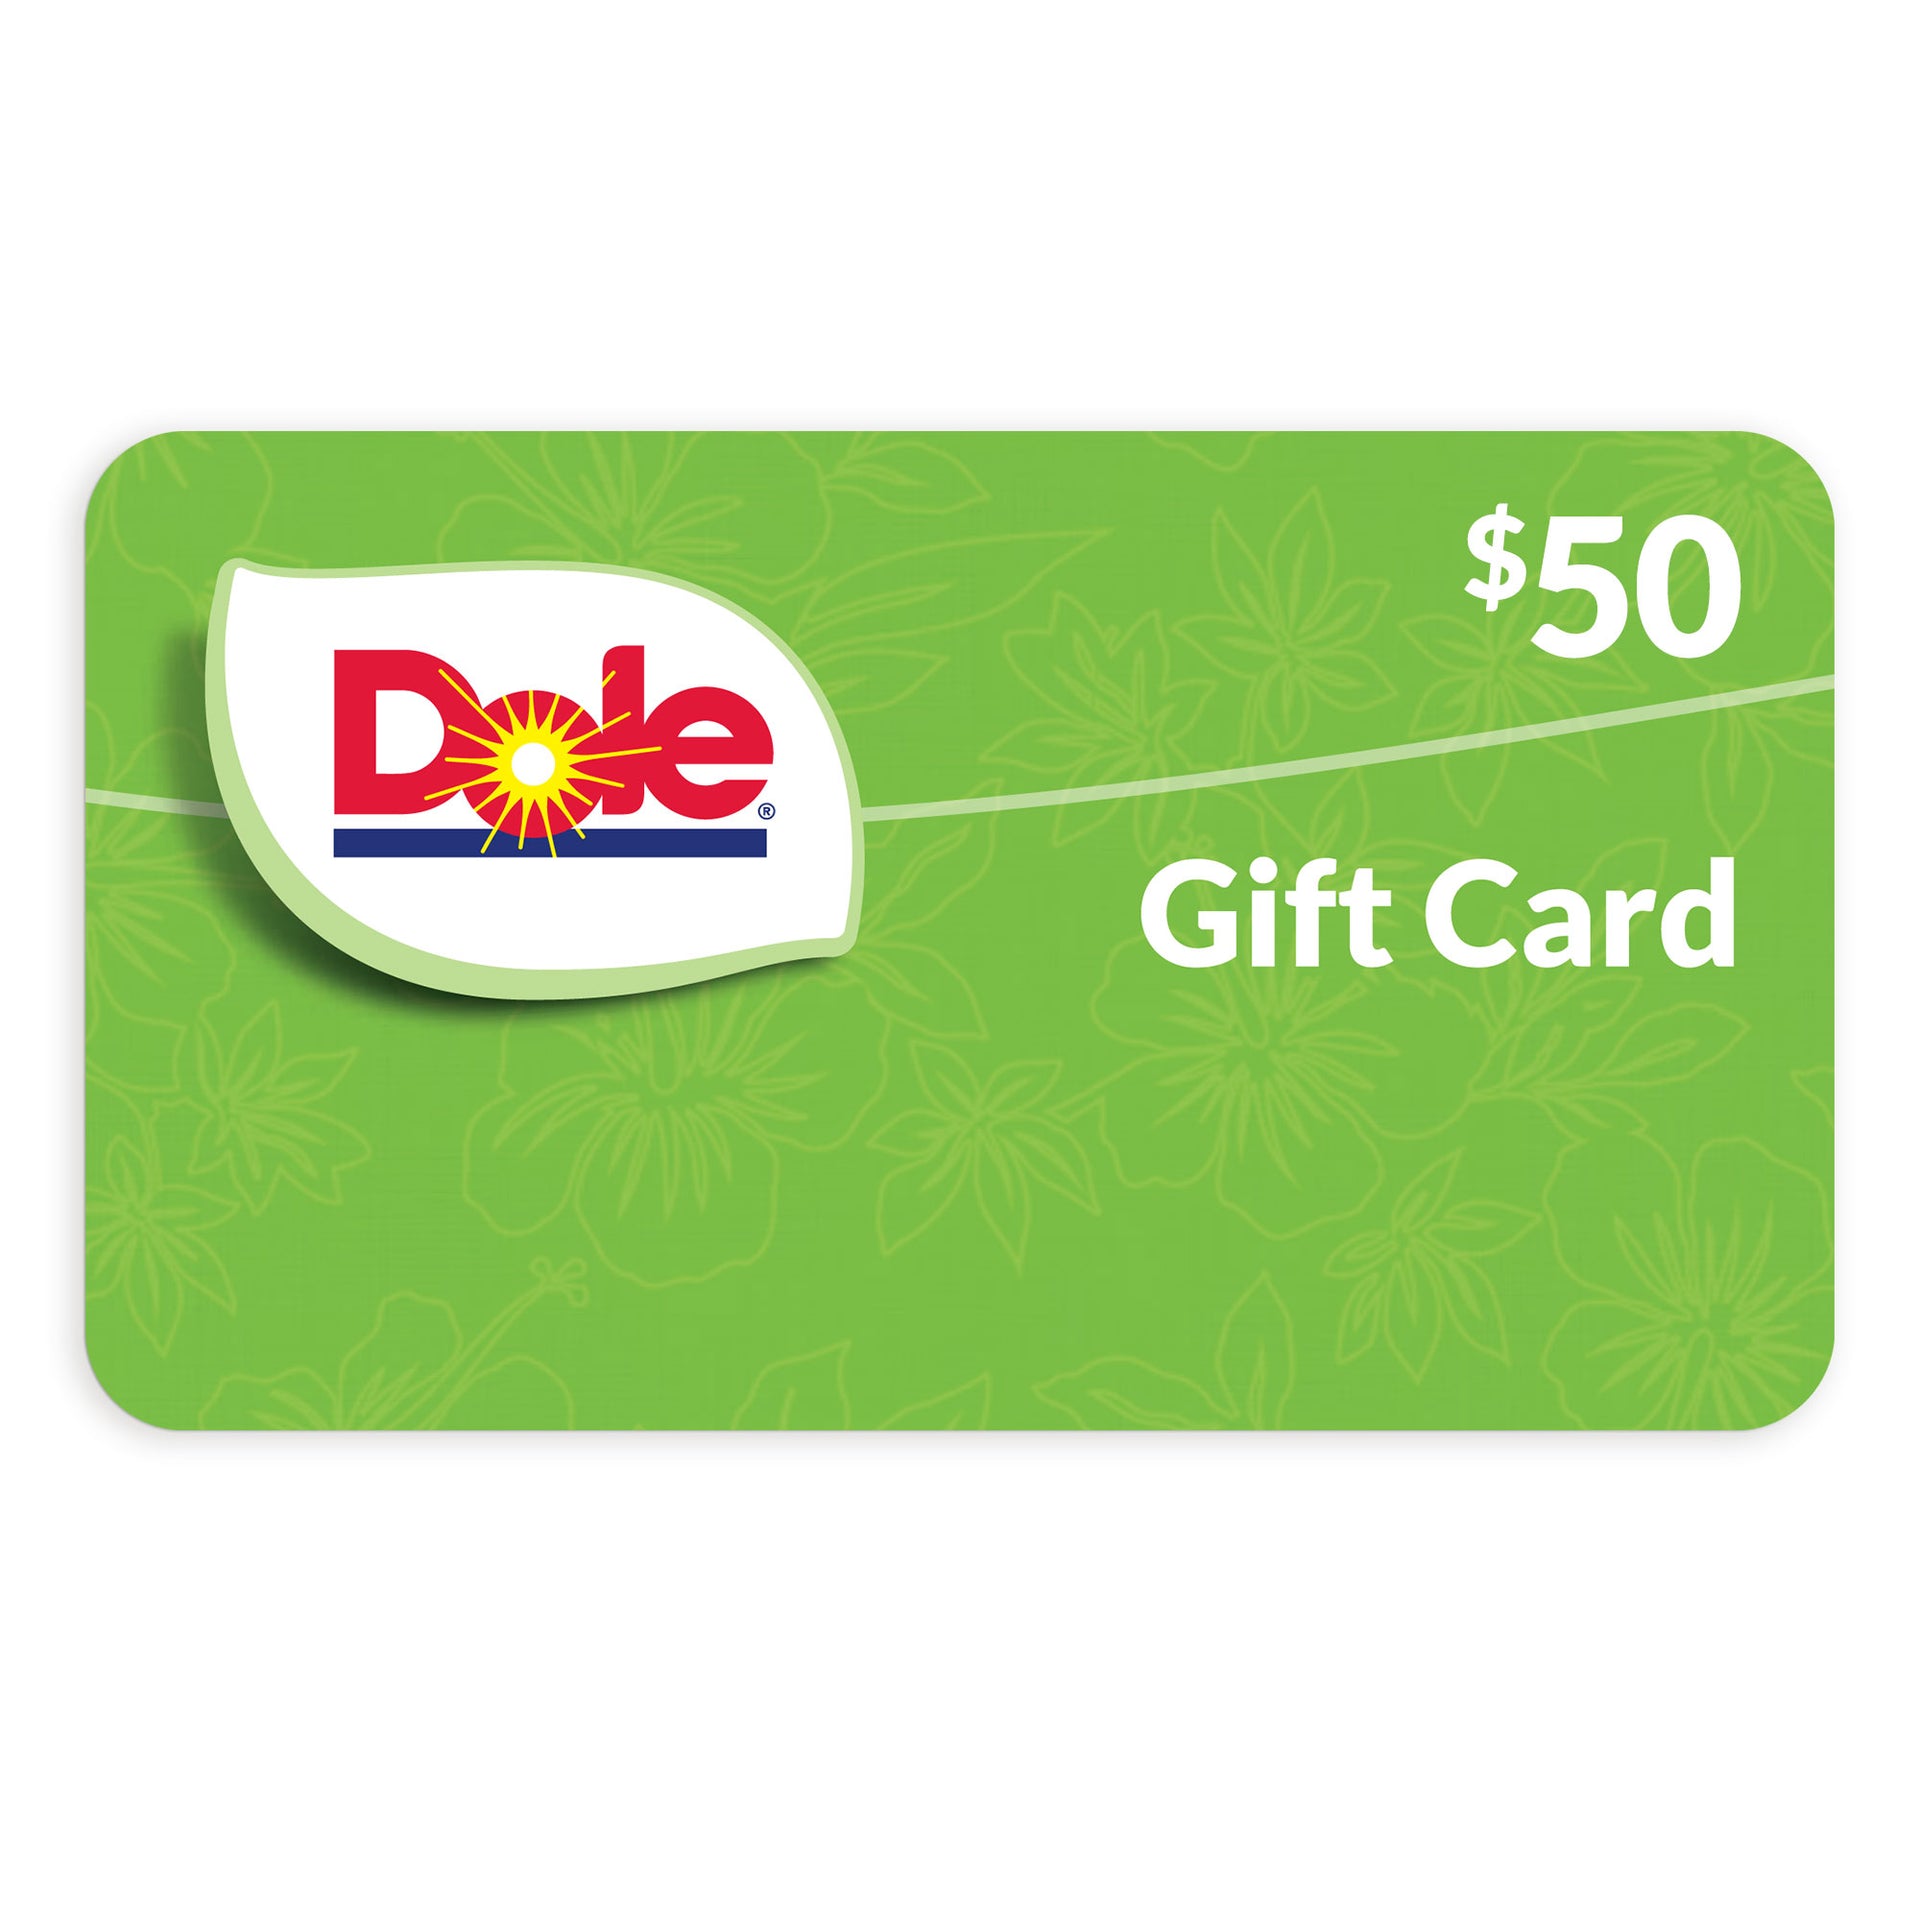 Dole Fruit Hawaii Gift Card $50